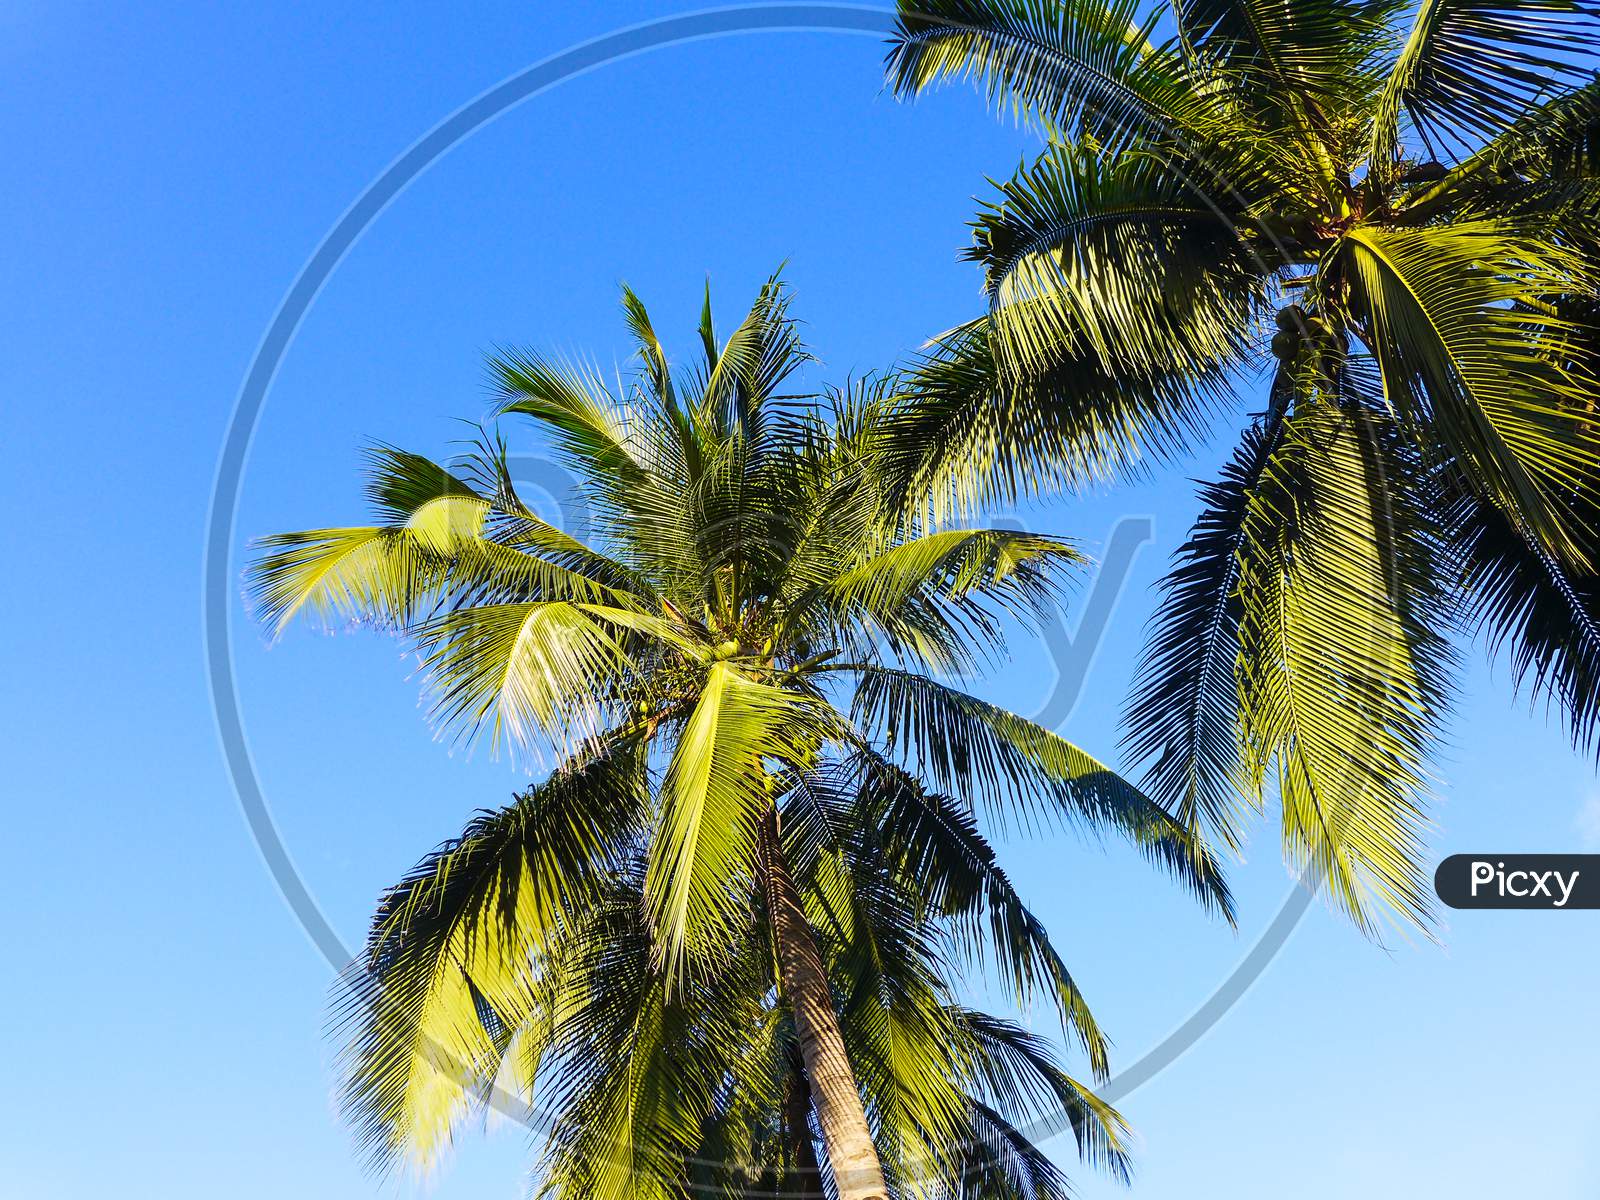 Coconut trees along the beach